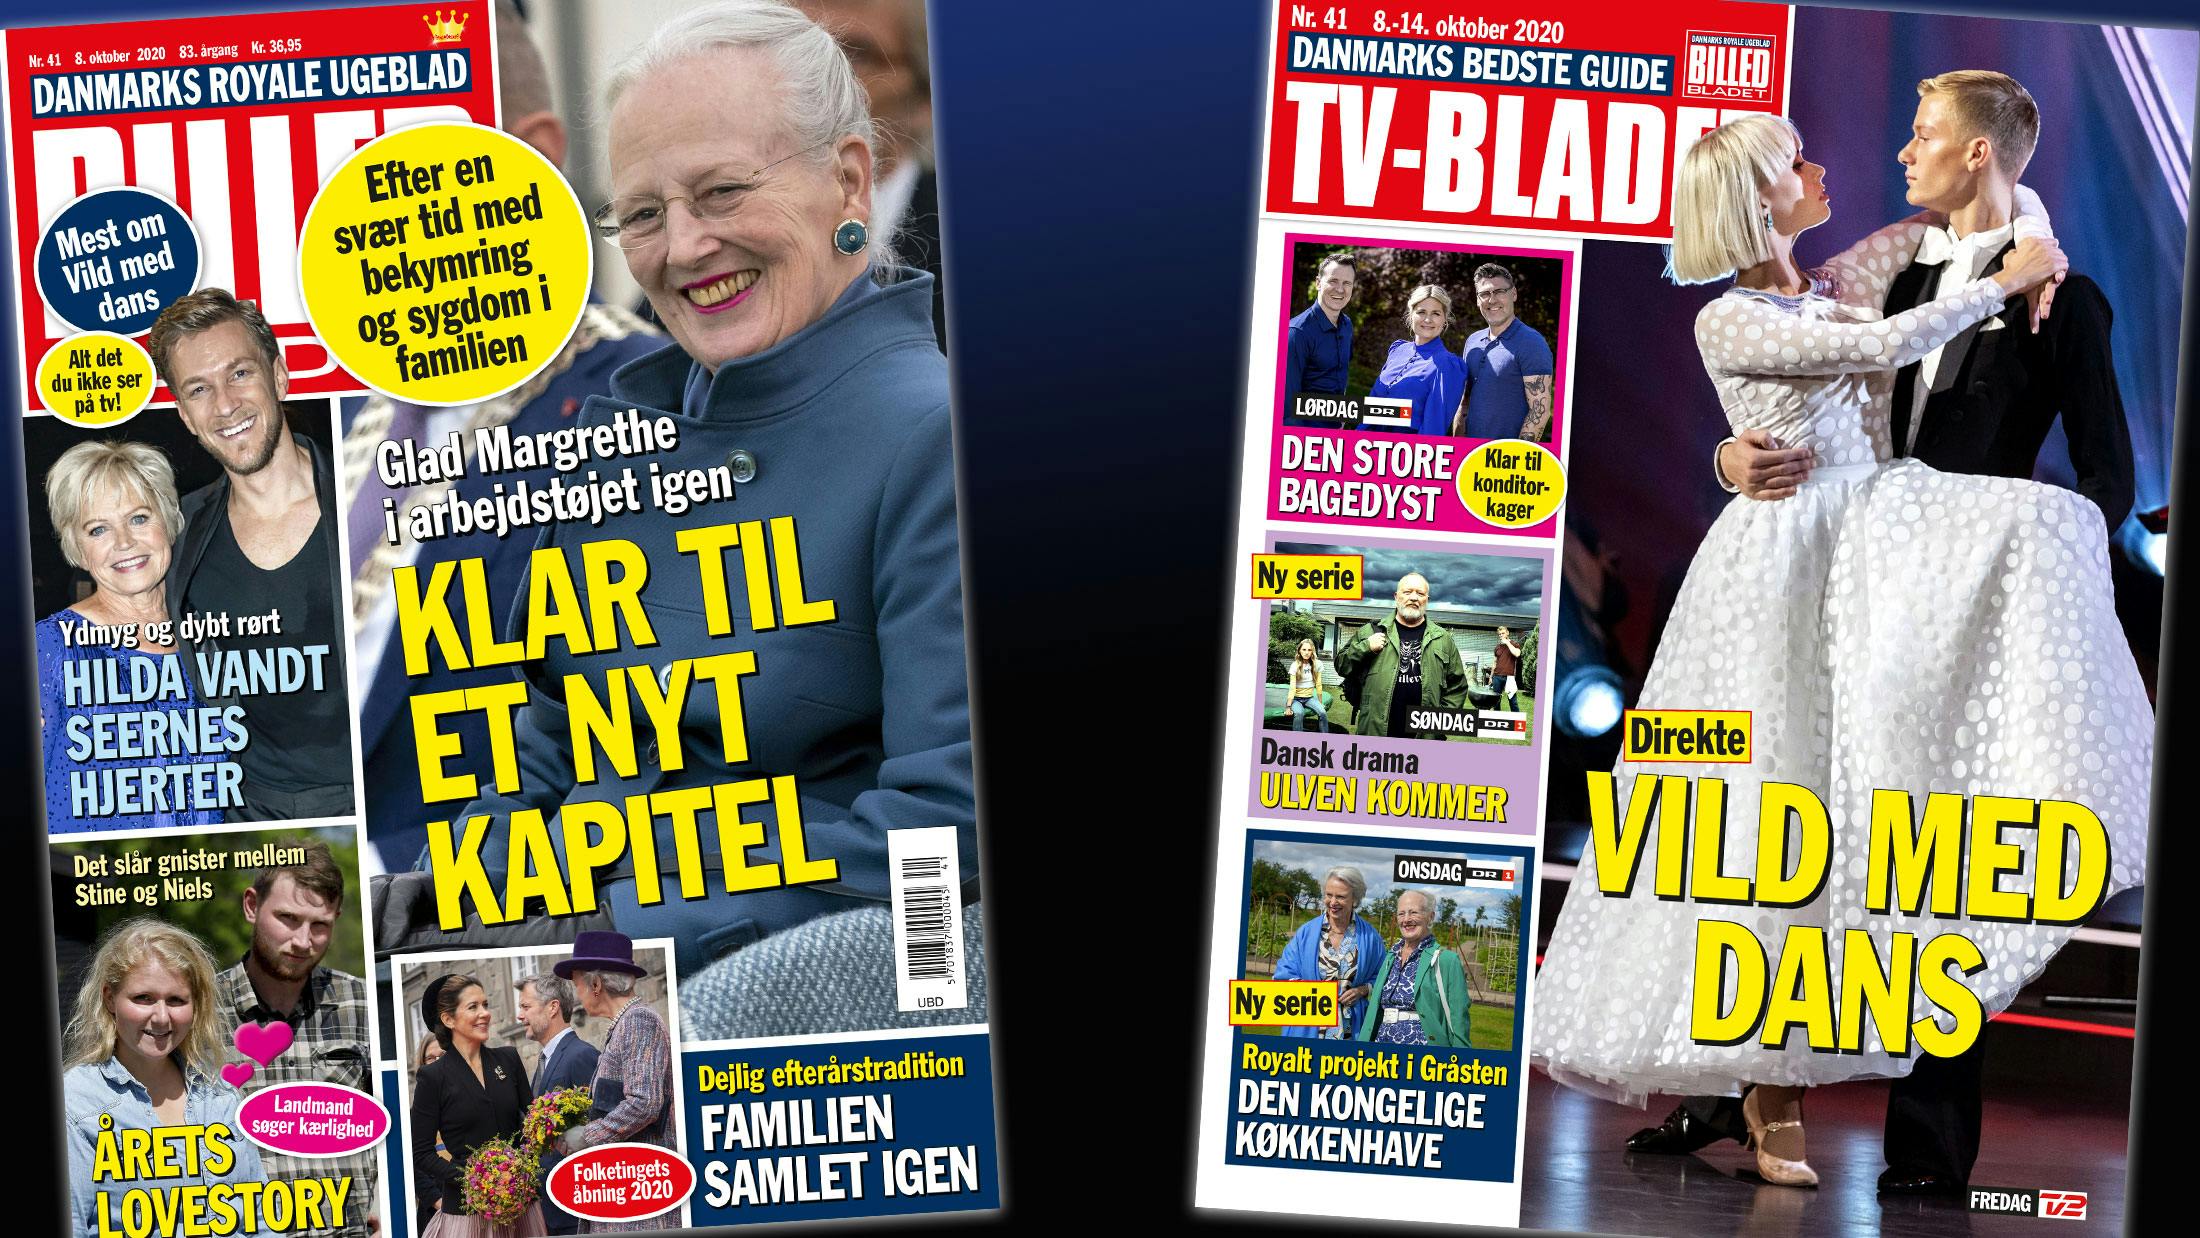 https://imgix.billedbladet.dk/media/article/webgrafik_bb41-forsider.jpg